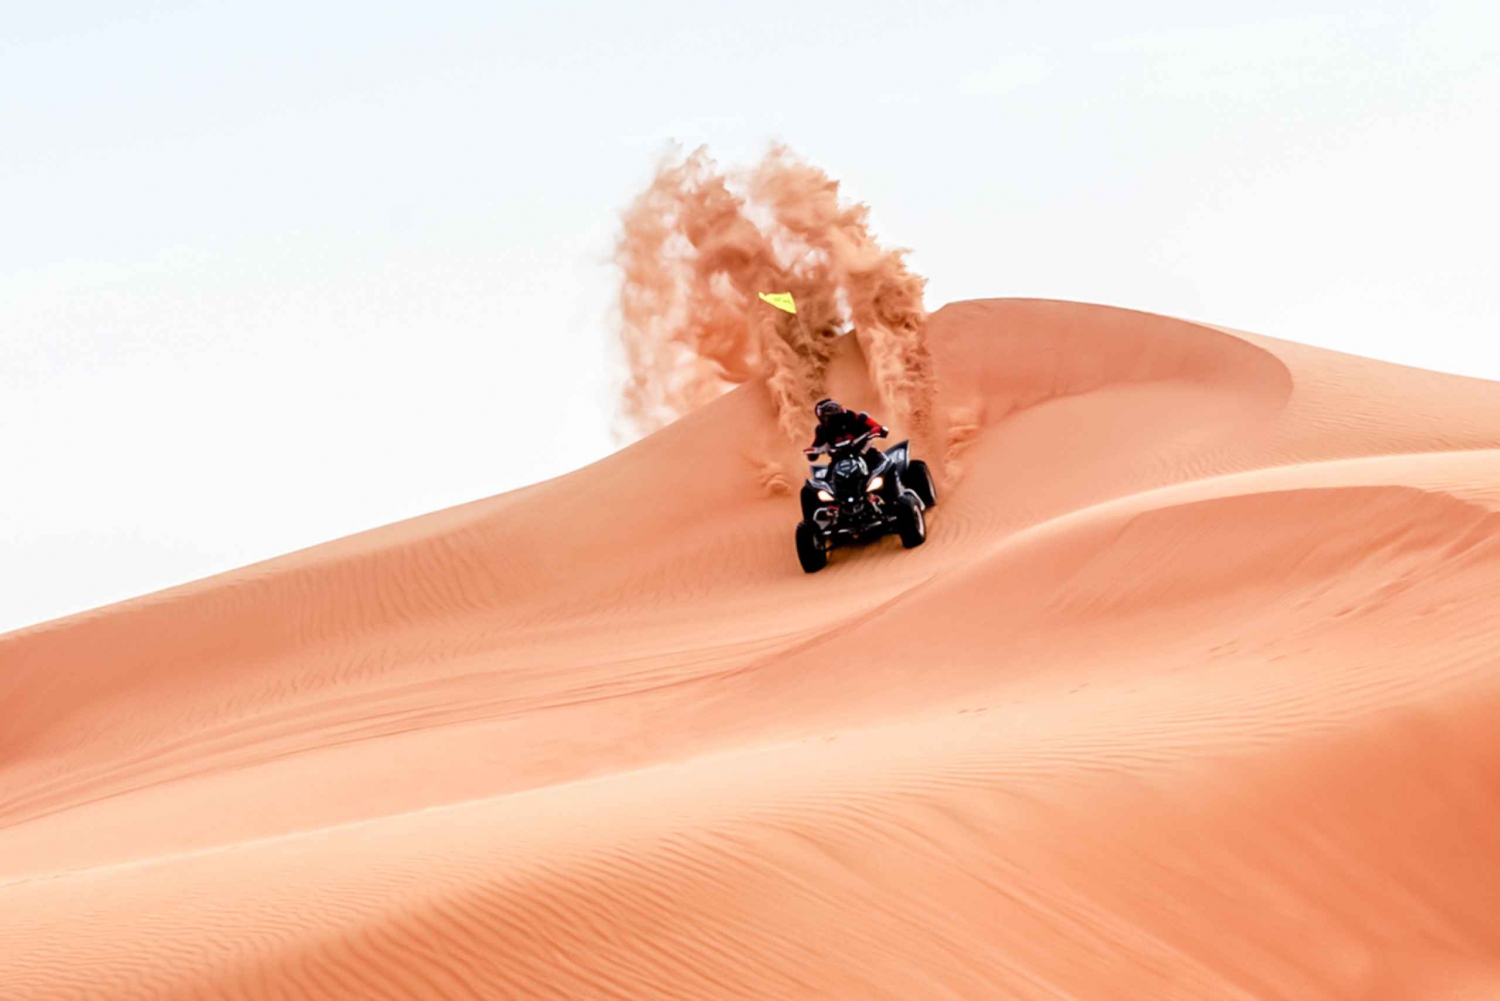 Dubai: Bike the Red Dunes, Camel Rides, Sandboarding and BBQ